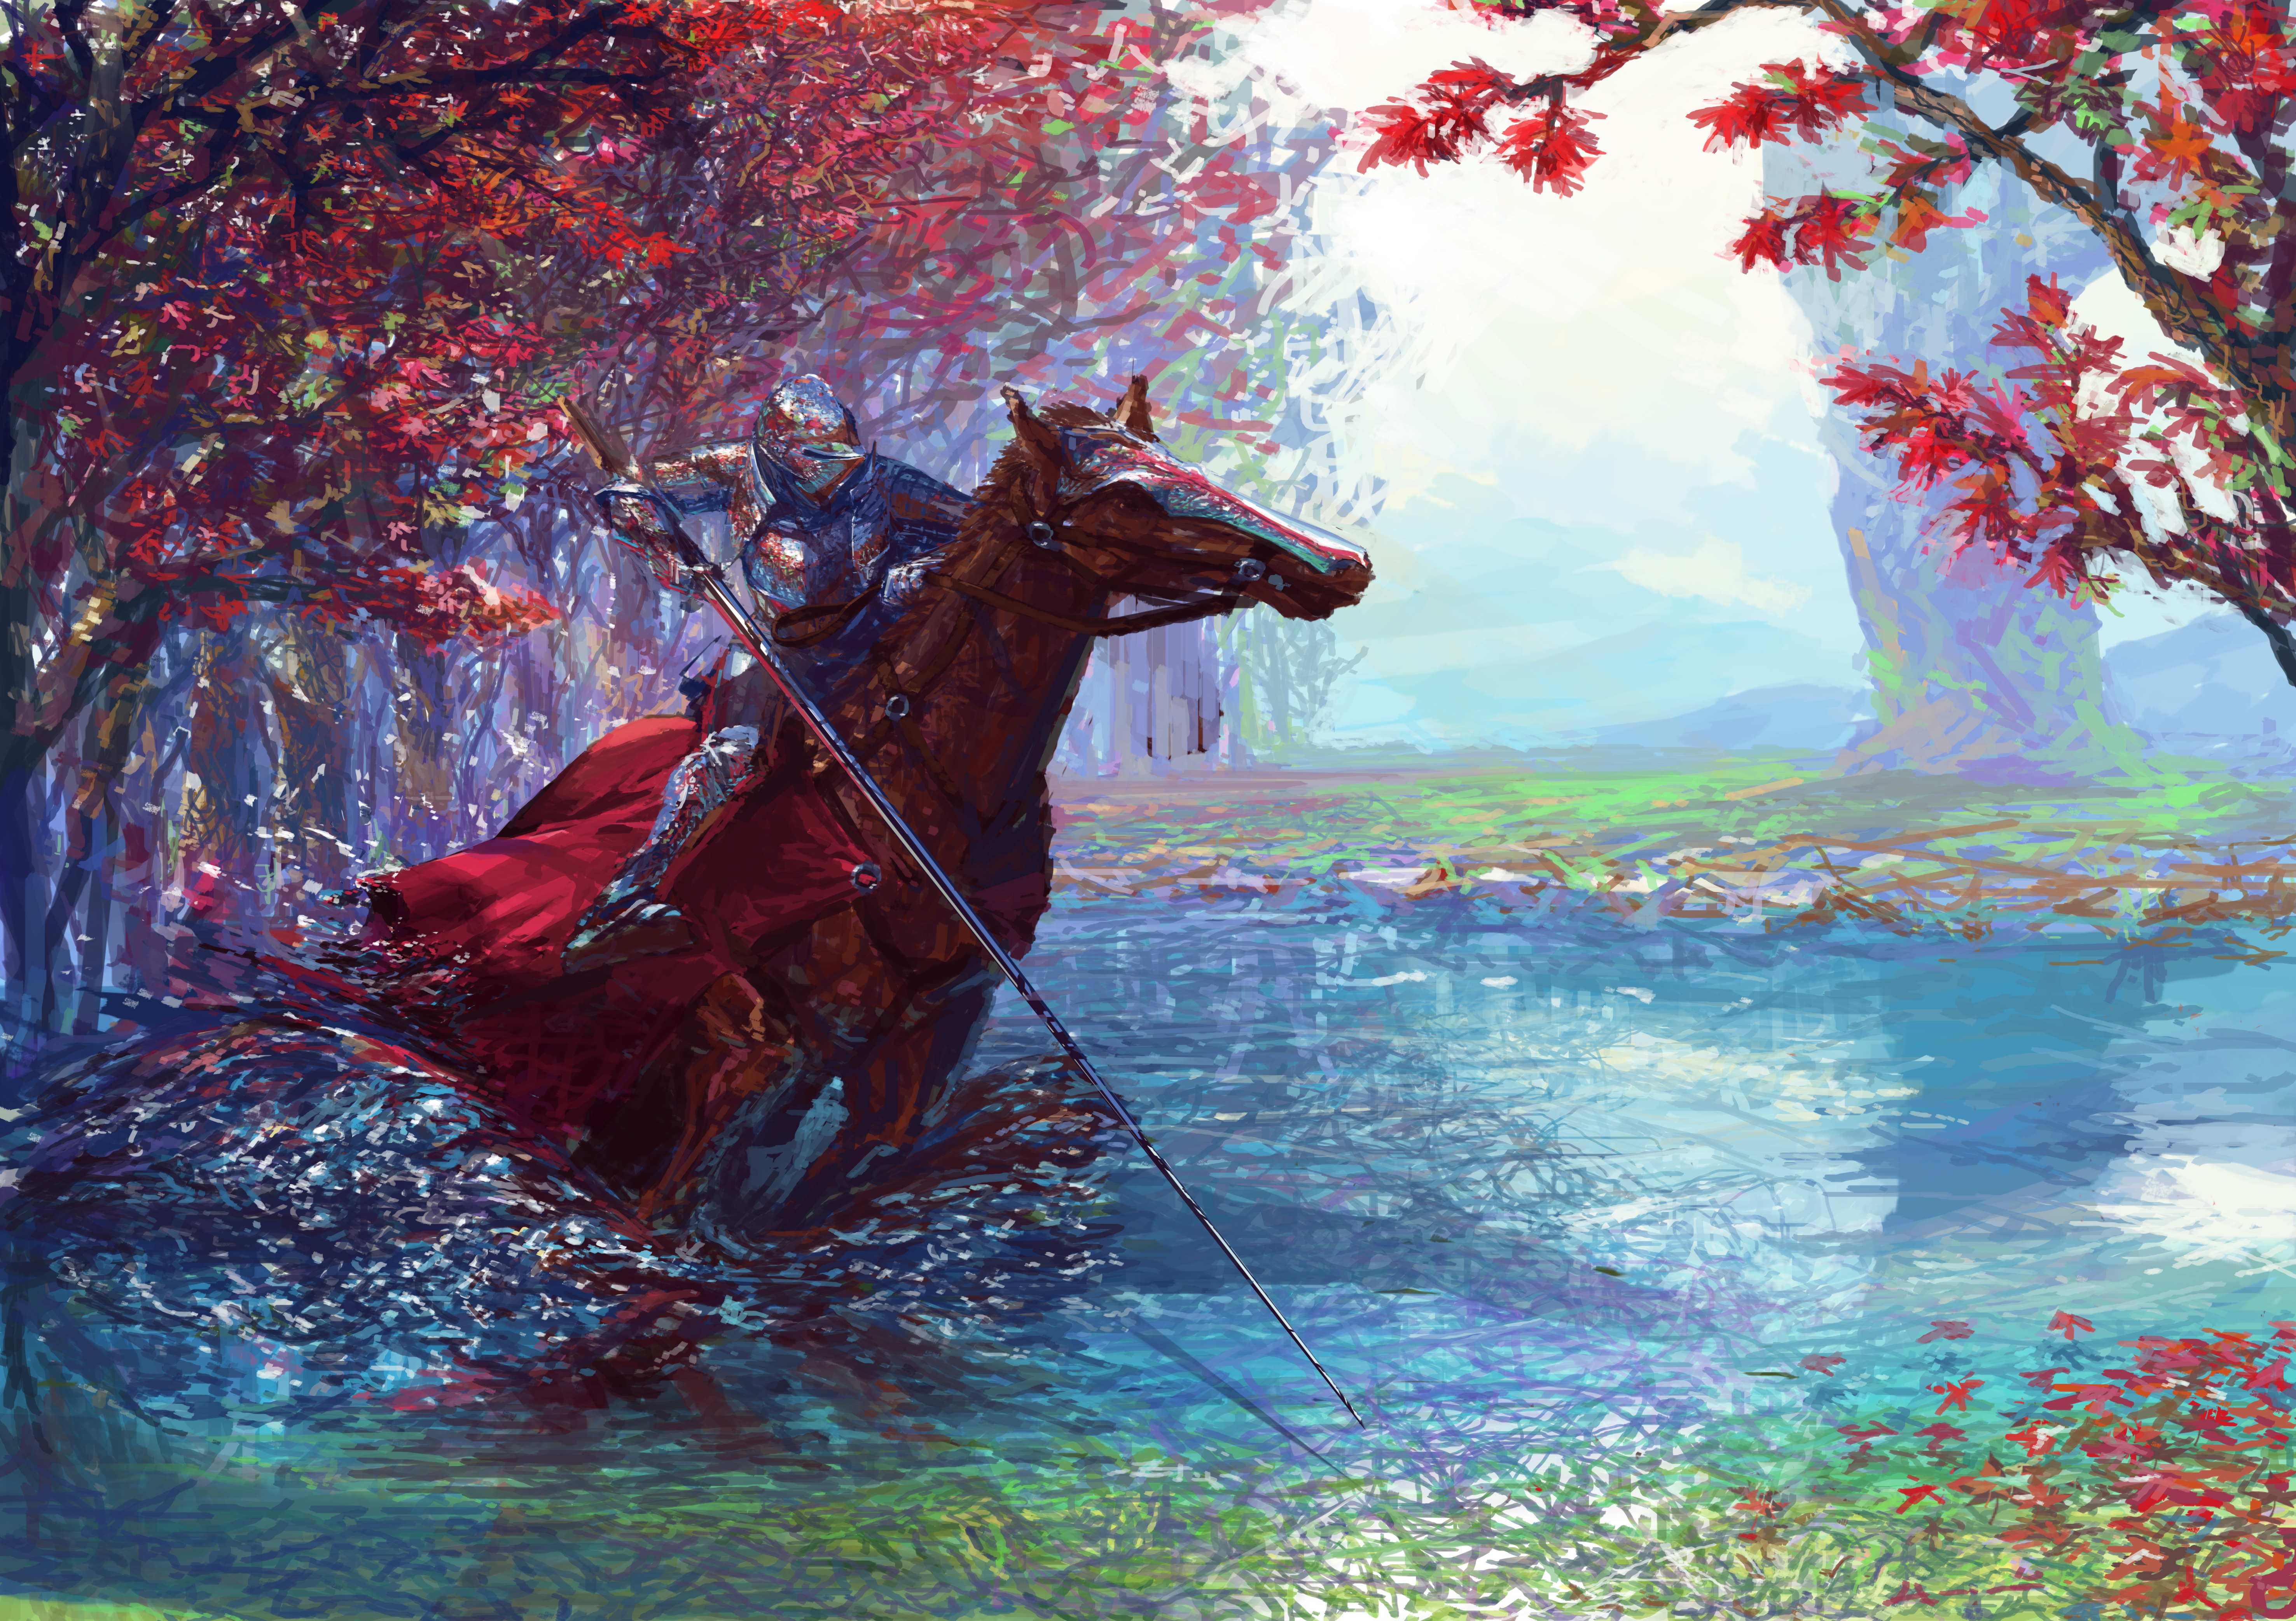 Knight on Horseback (Colorful) by hammk